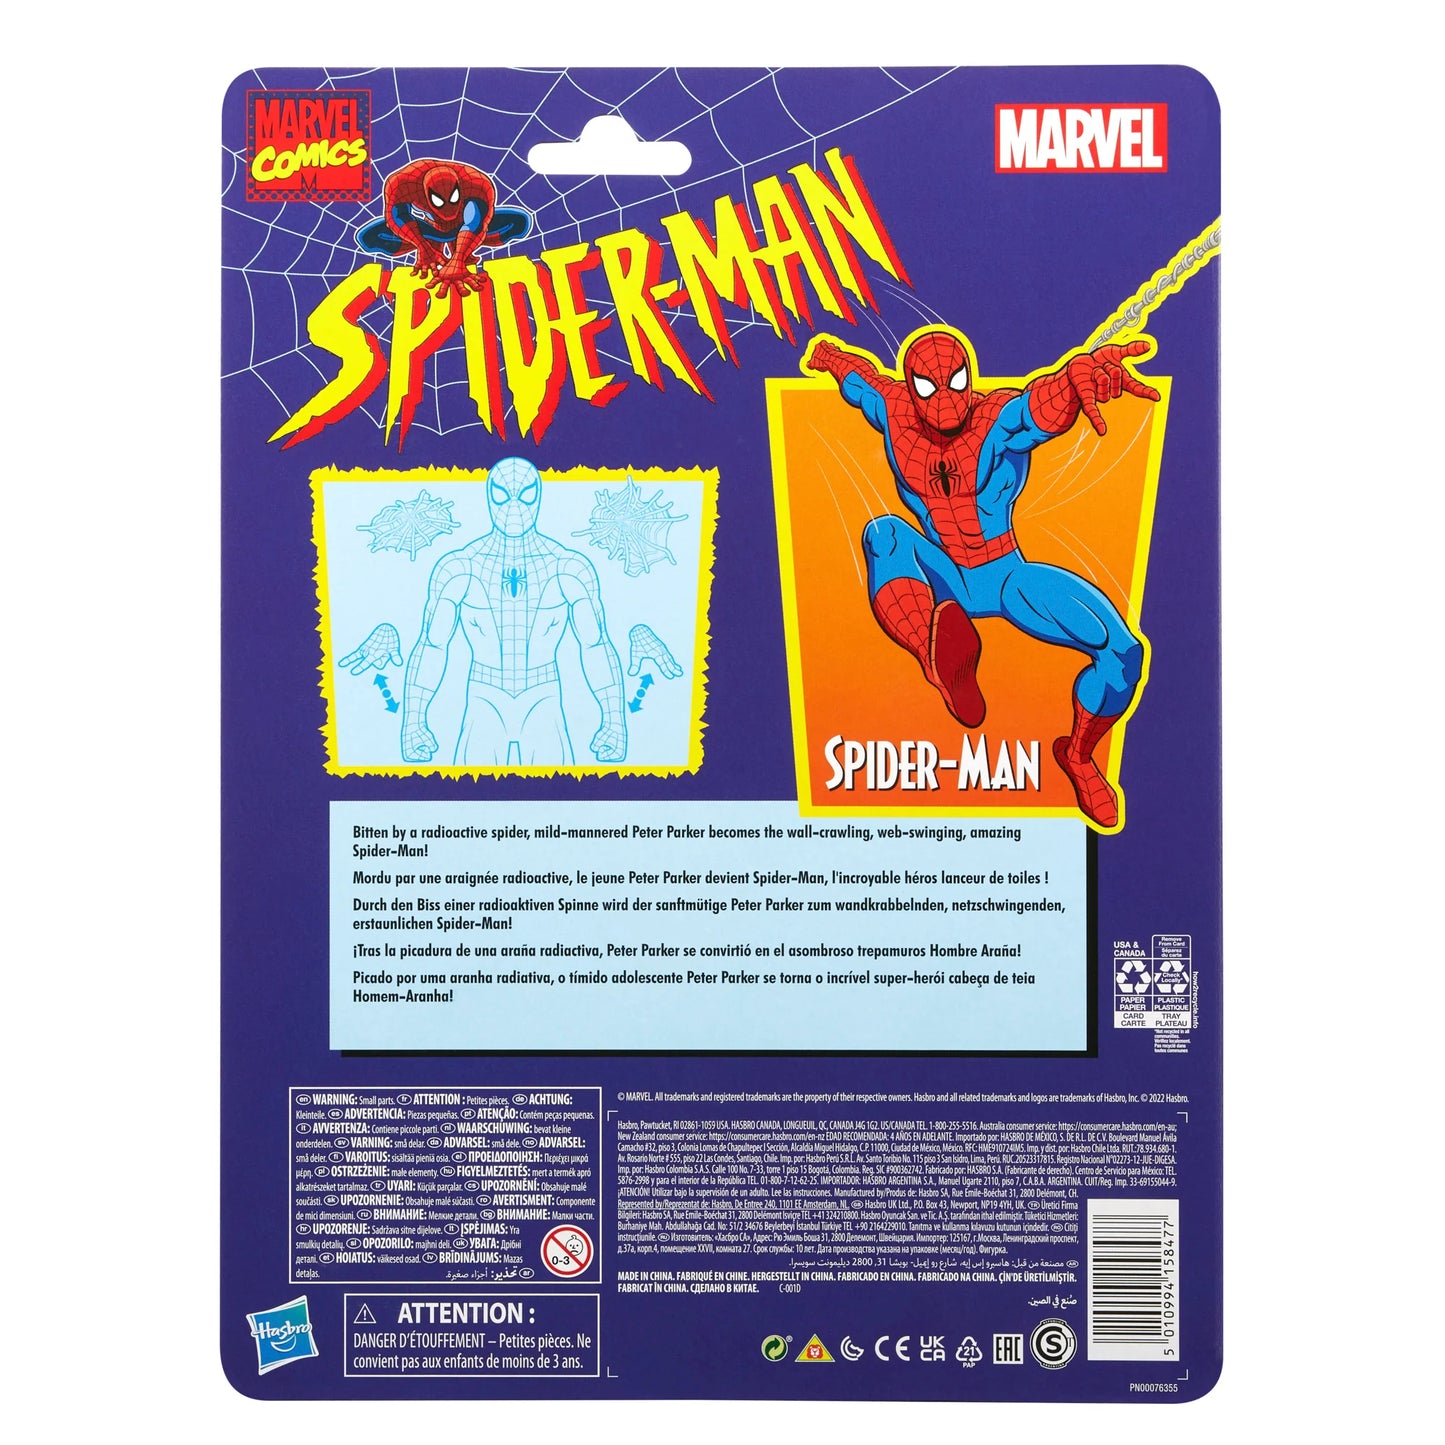 Marvel Legends - Spider-Man Retro - Spider-Man - Web Splat! - F3477